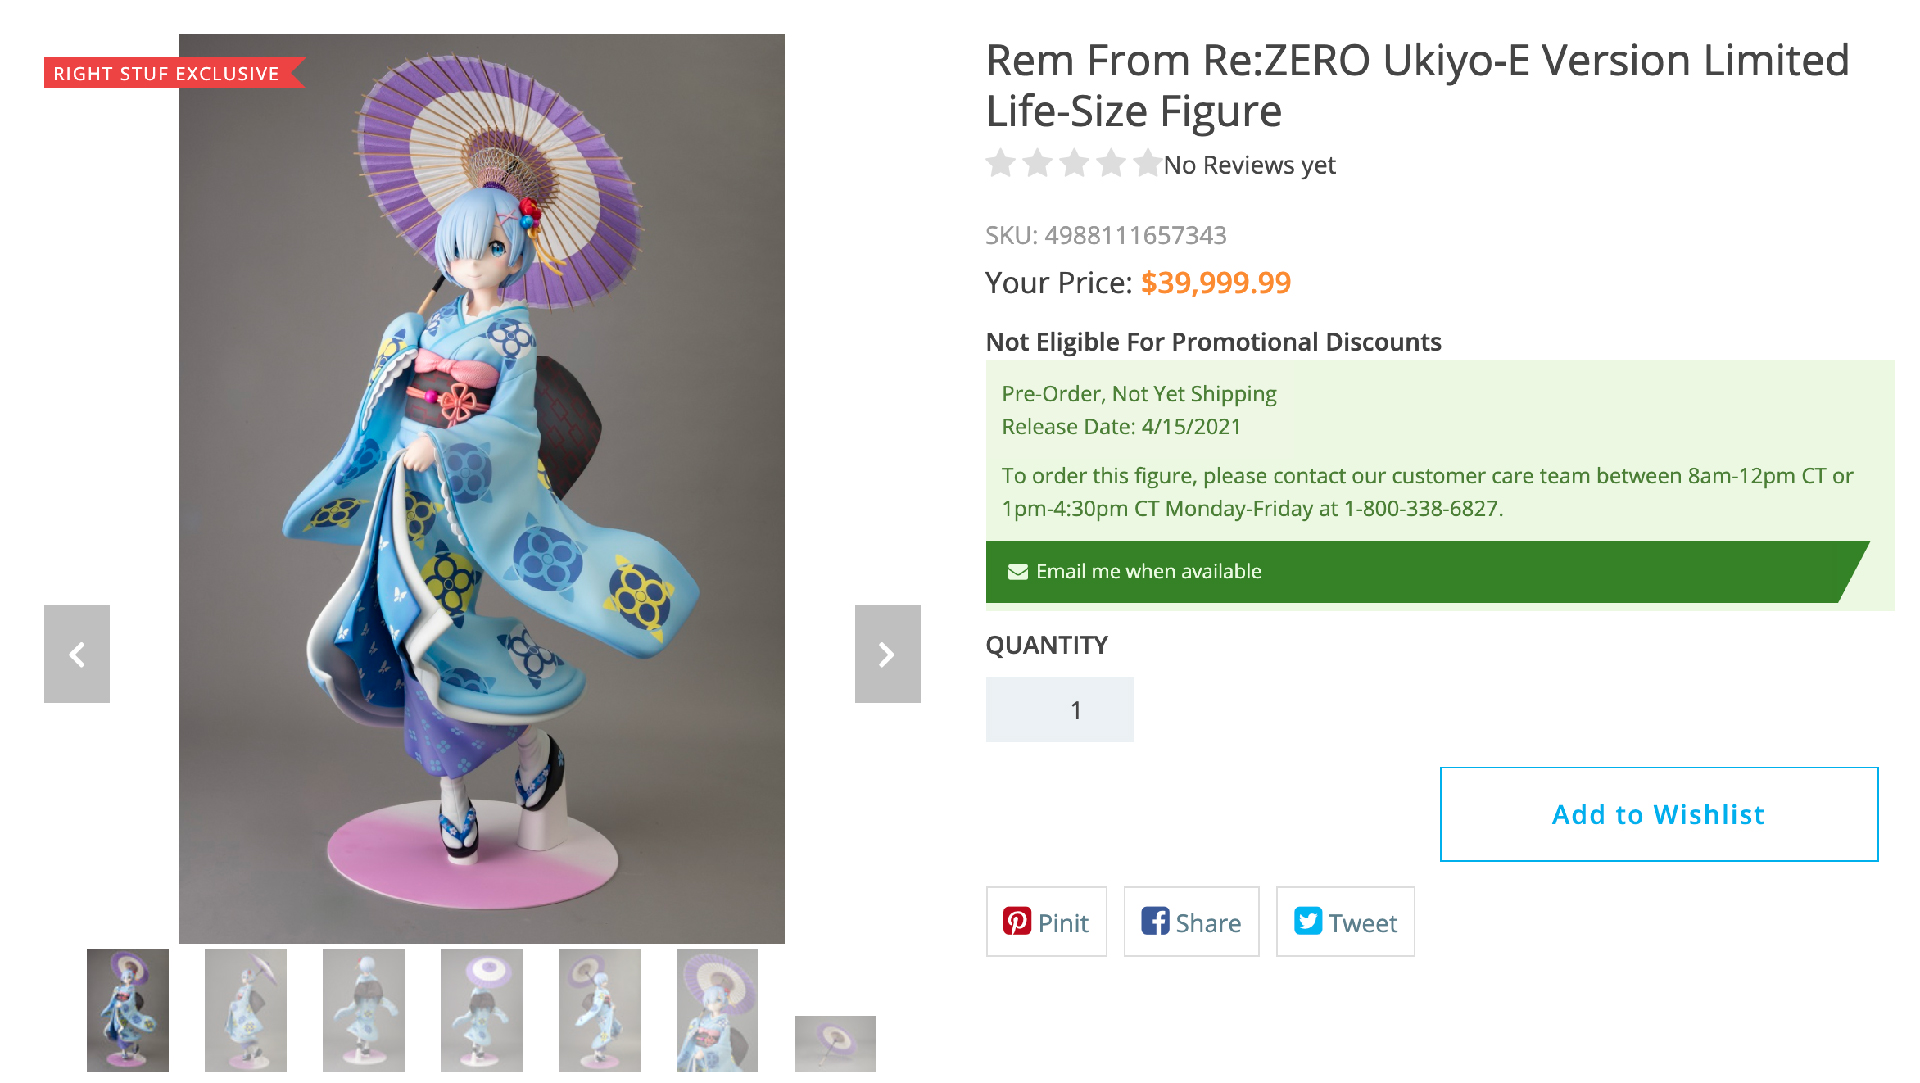 Rem From Re:ZERO Ukiyo-E Version Limited Life-Size Figure